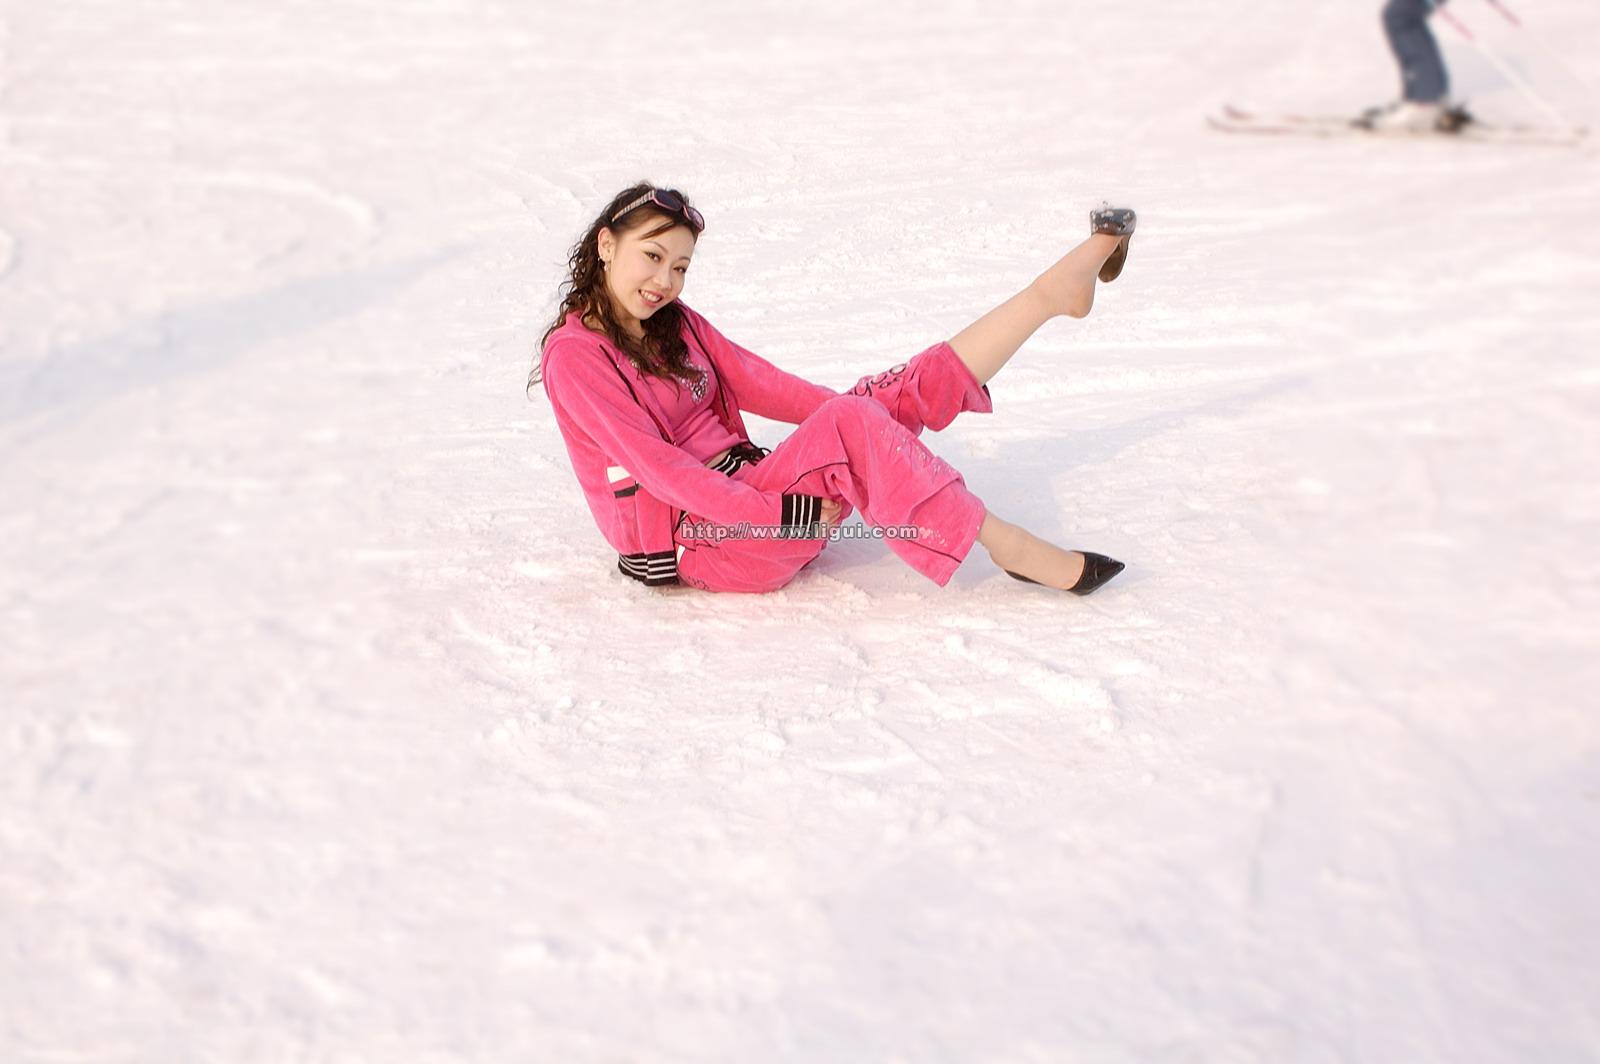 [Ligui丽柜会所]2006-04-19 璐璐 滑雪场内红色运动装与肉色丝袜美腿写真,